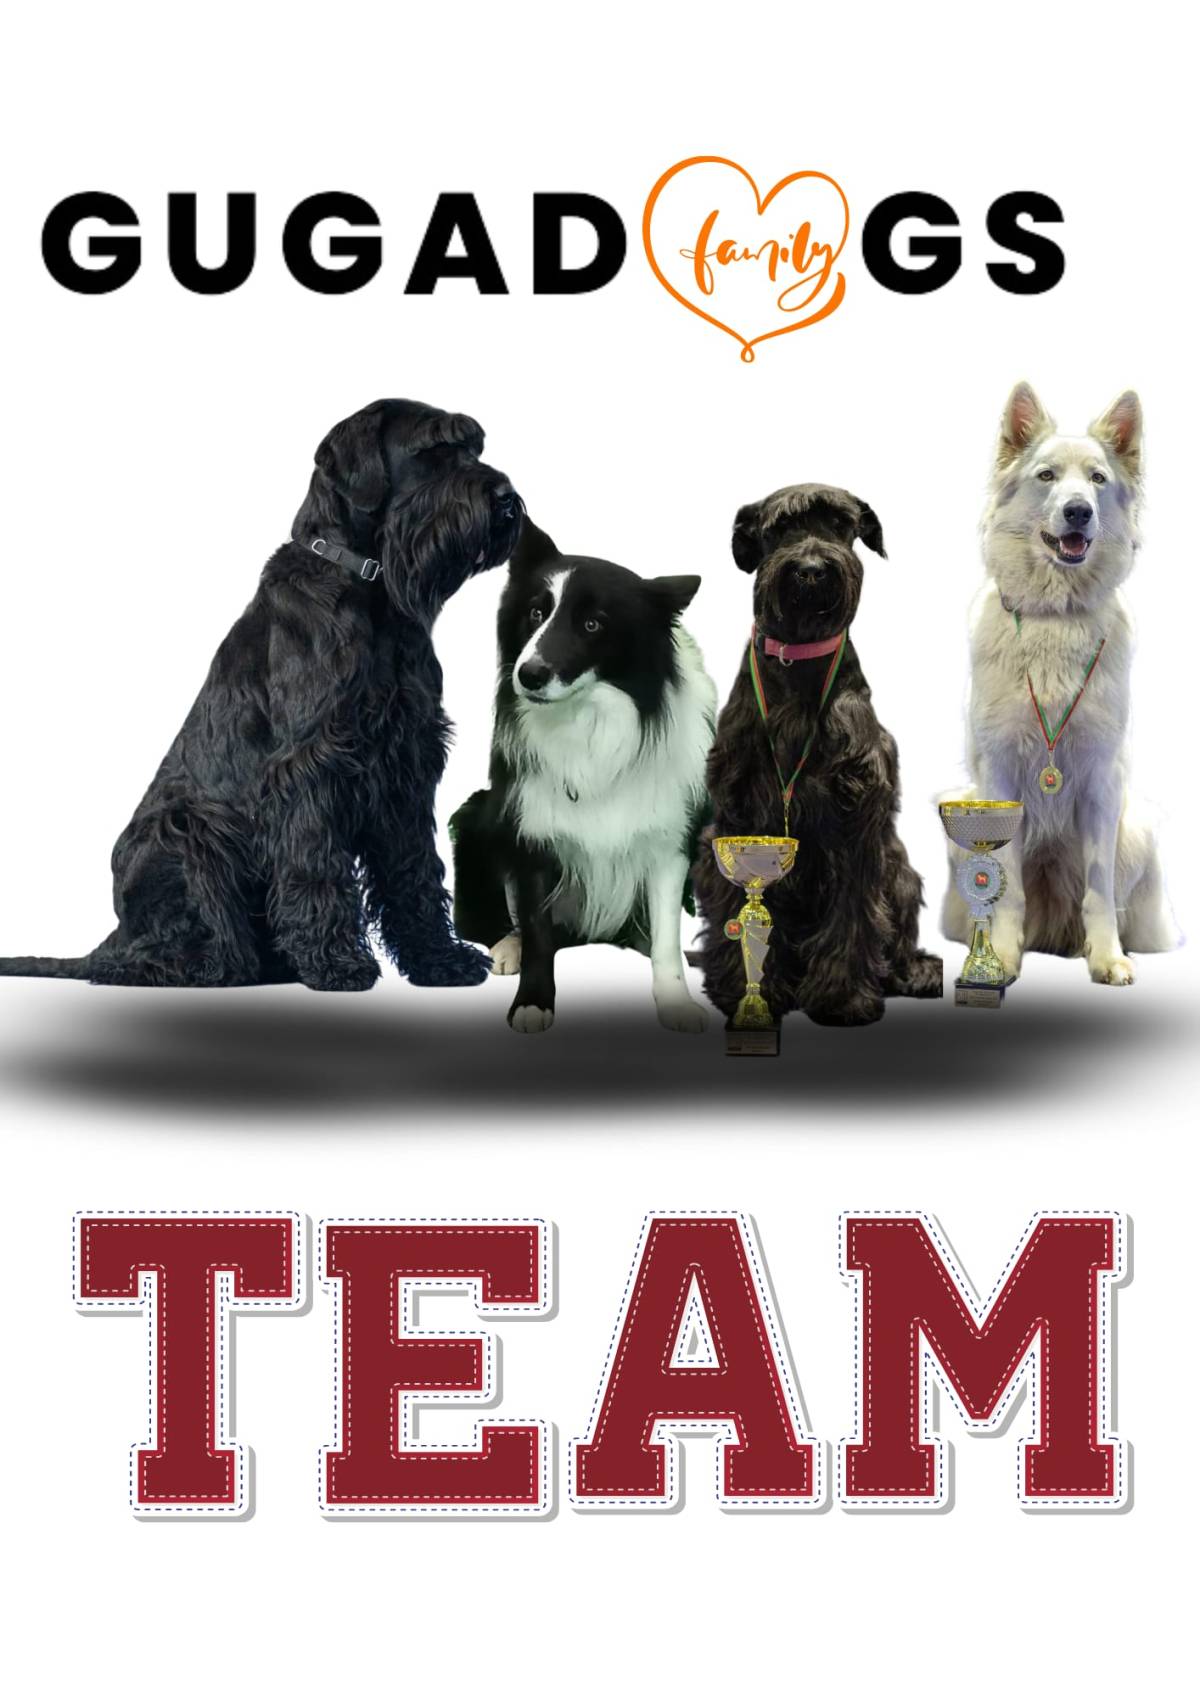 Gugadogs - Guimarães - Creche para Cães